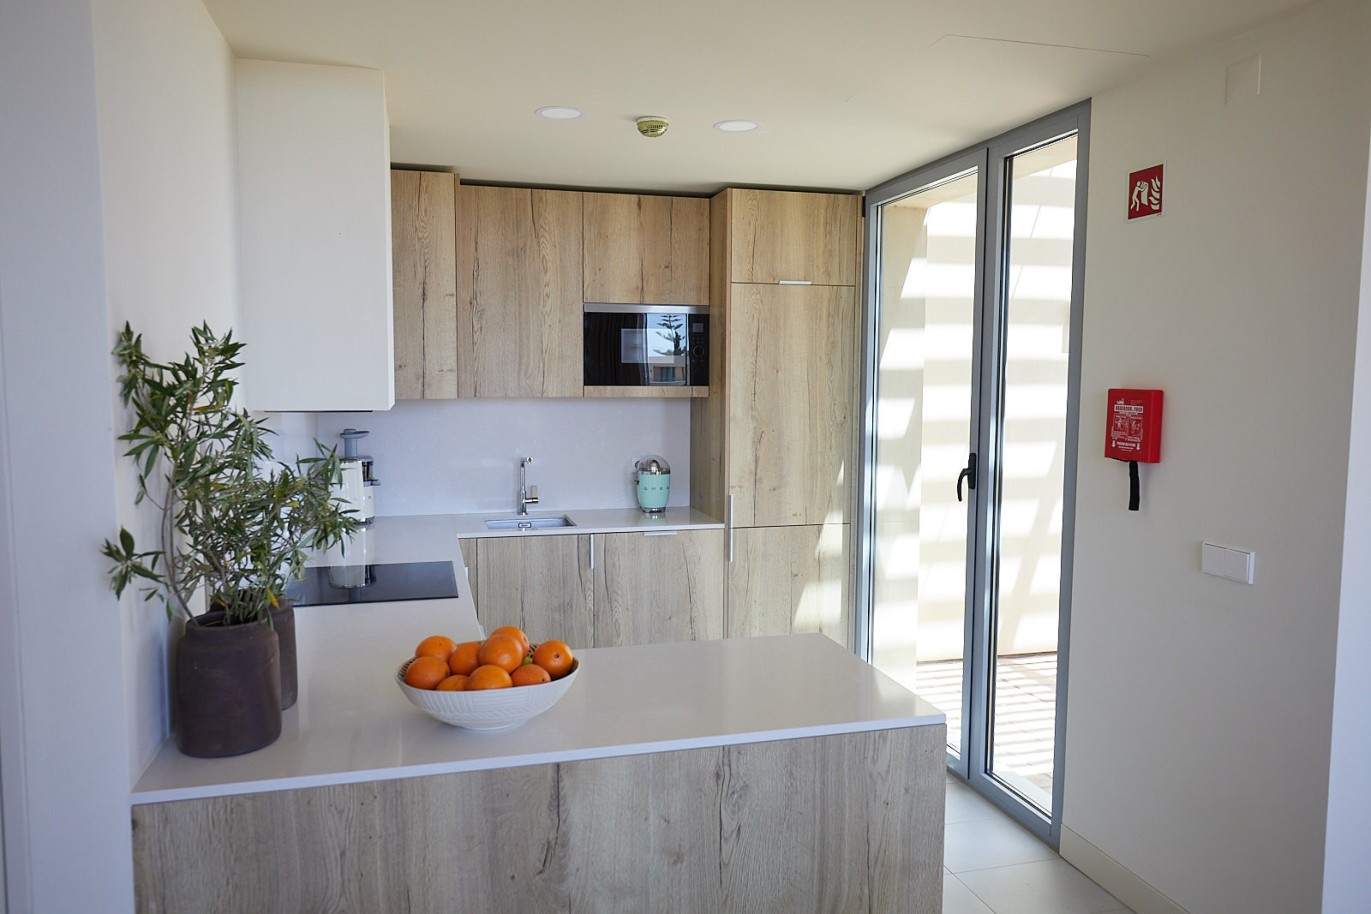 2 bedroom apartment in resort, for sale in Porches, Algarve_229182